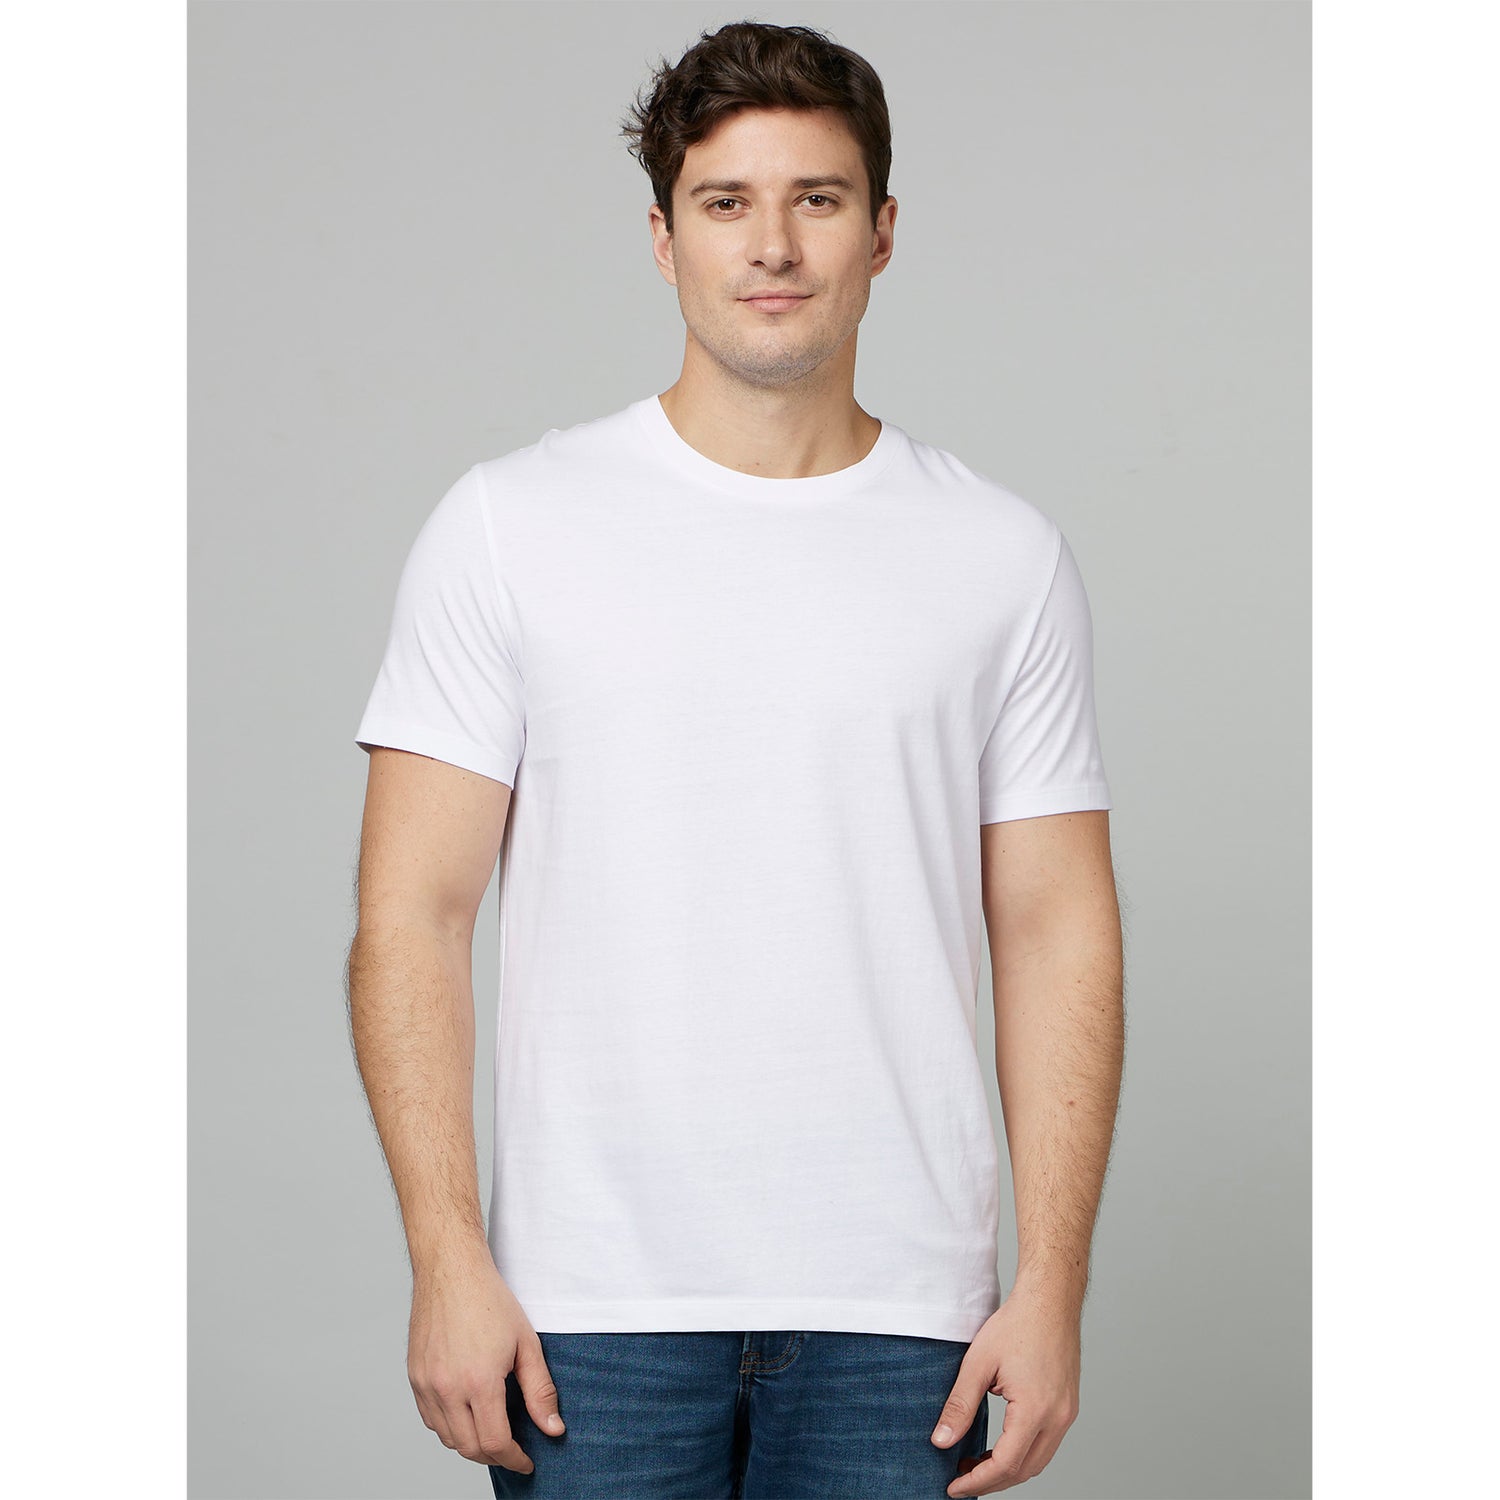 White Round Neck Regular Fit Cotton T-shirt (TEBASE2)